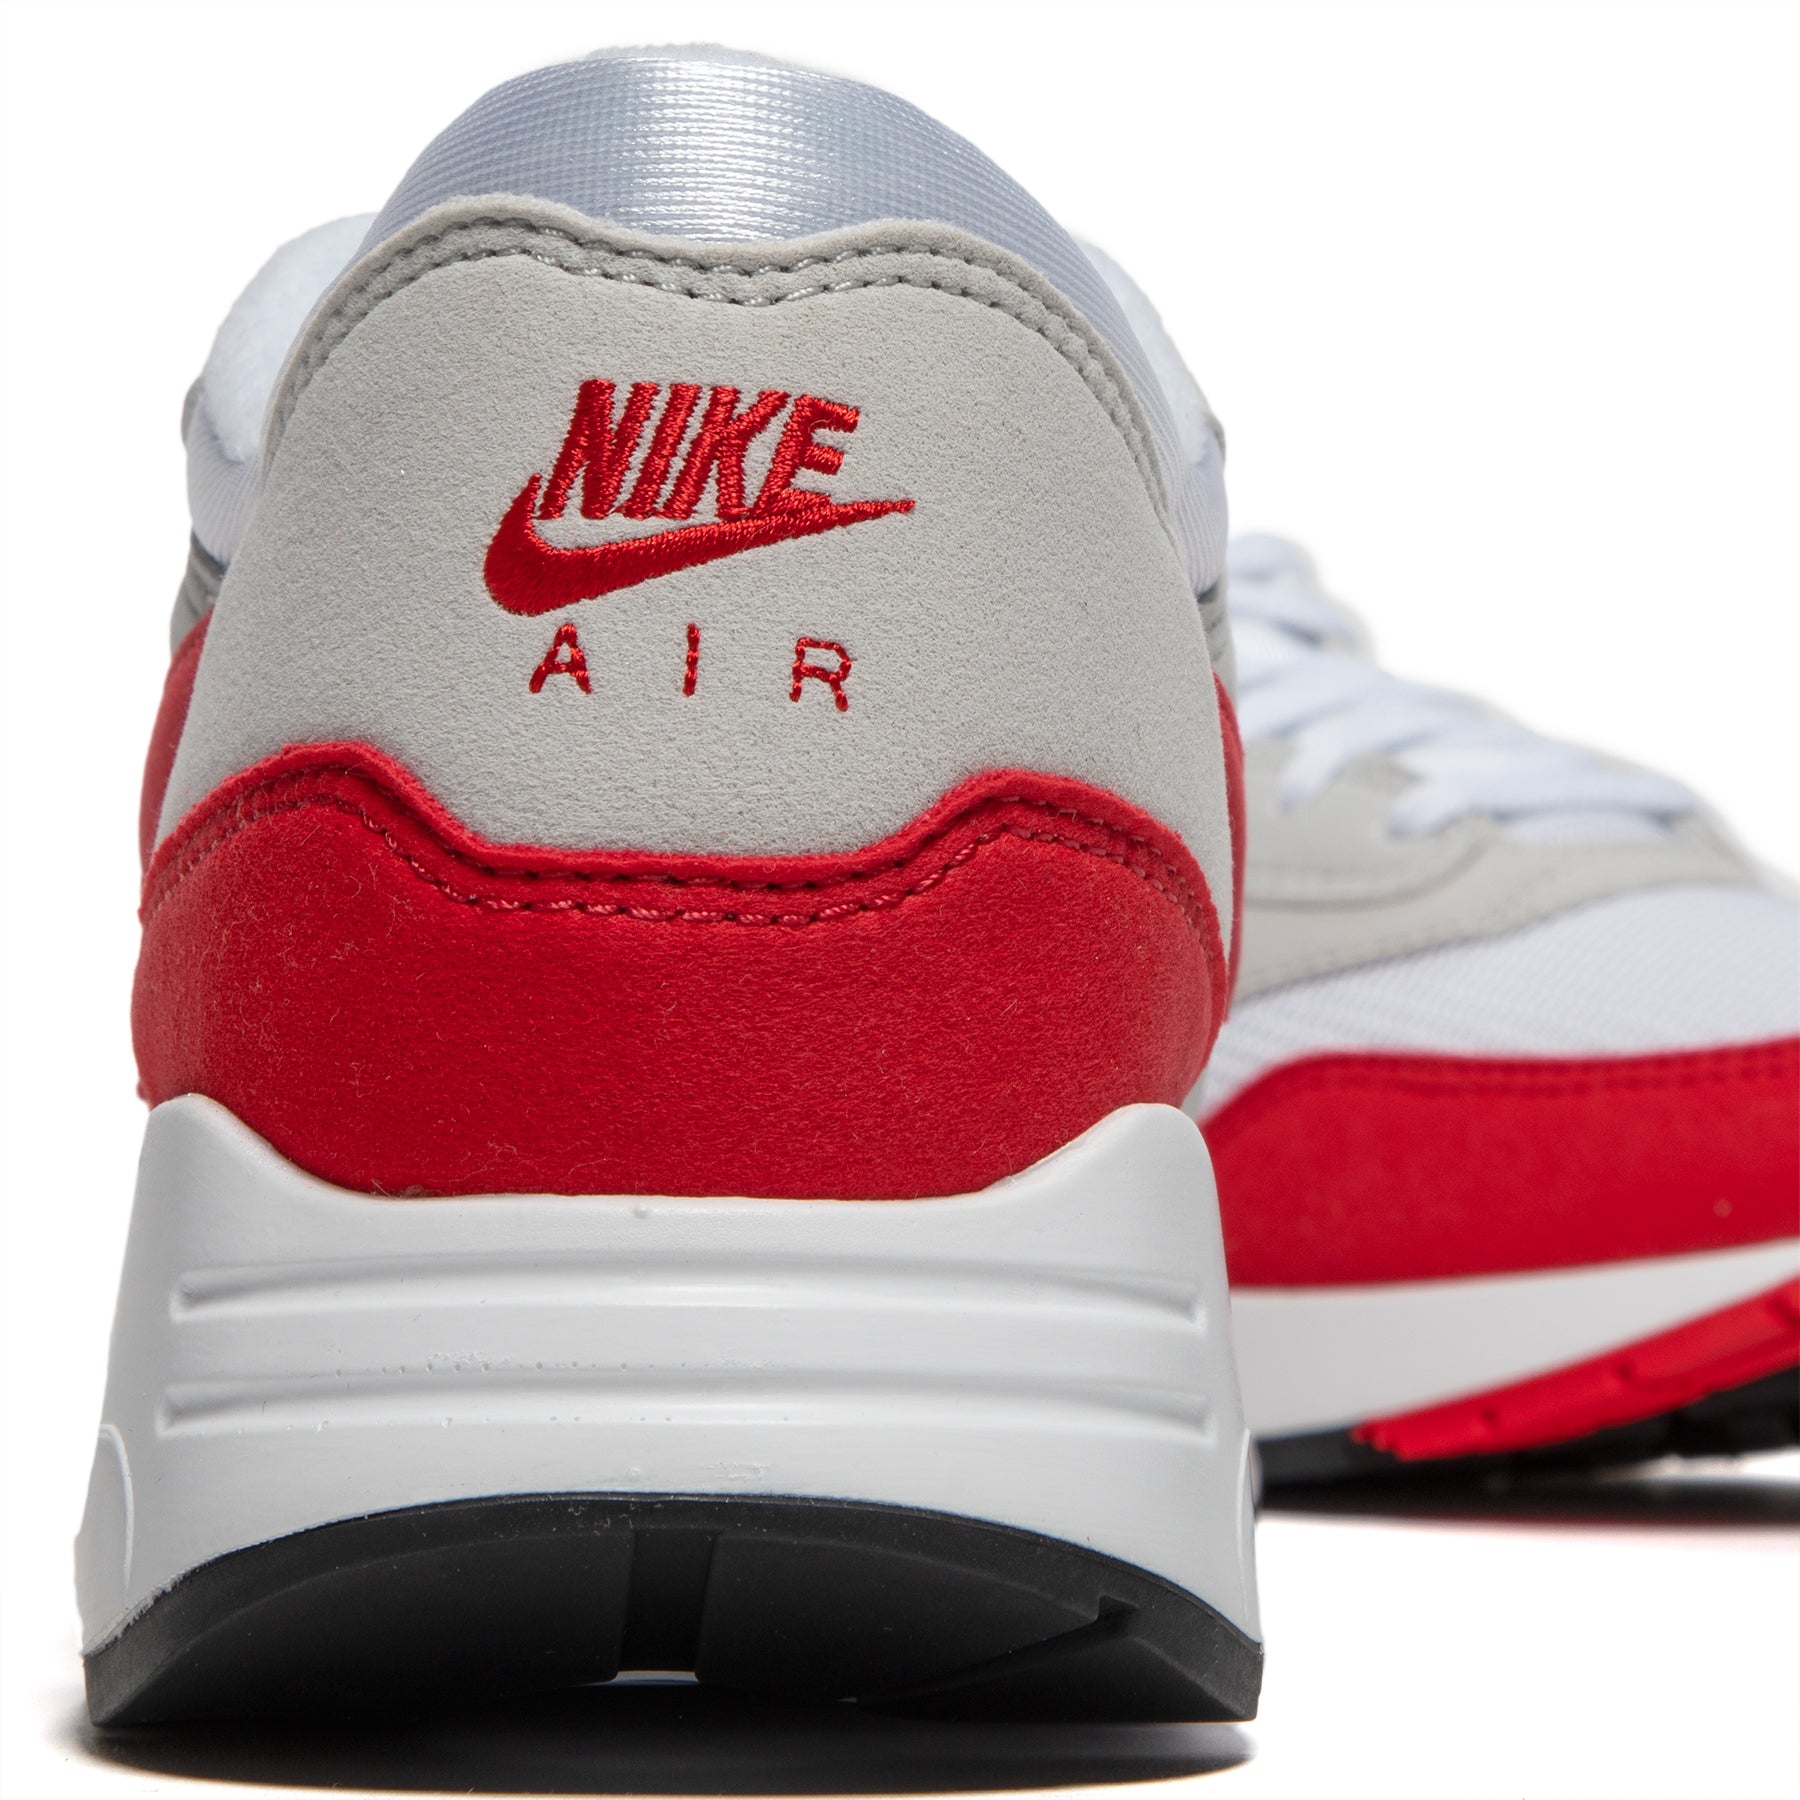 Nike Air Max 1 Premium Red/Light Neutral Grey) – Concepts